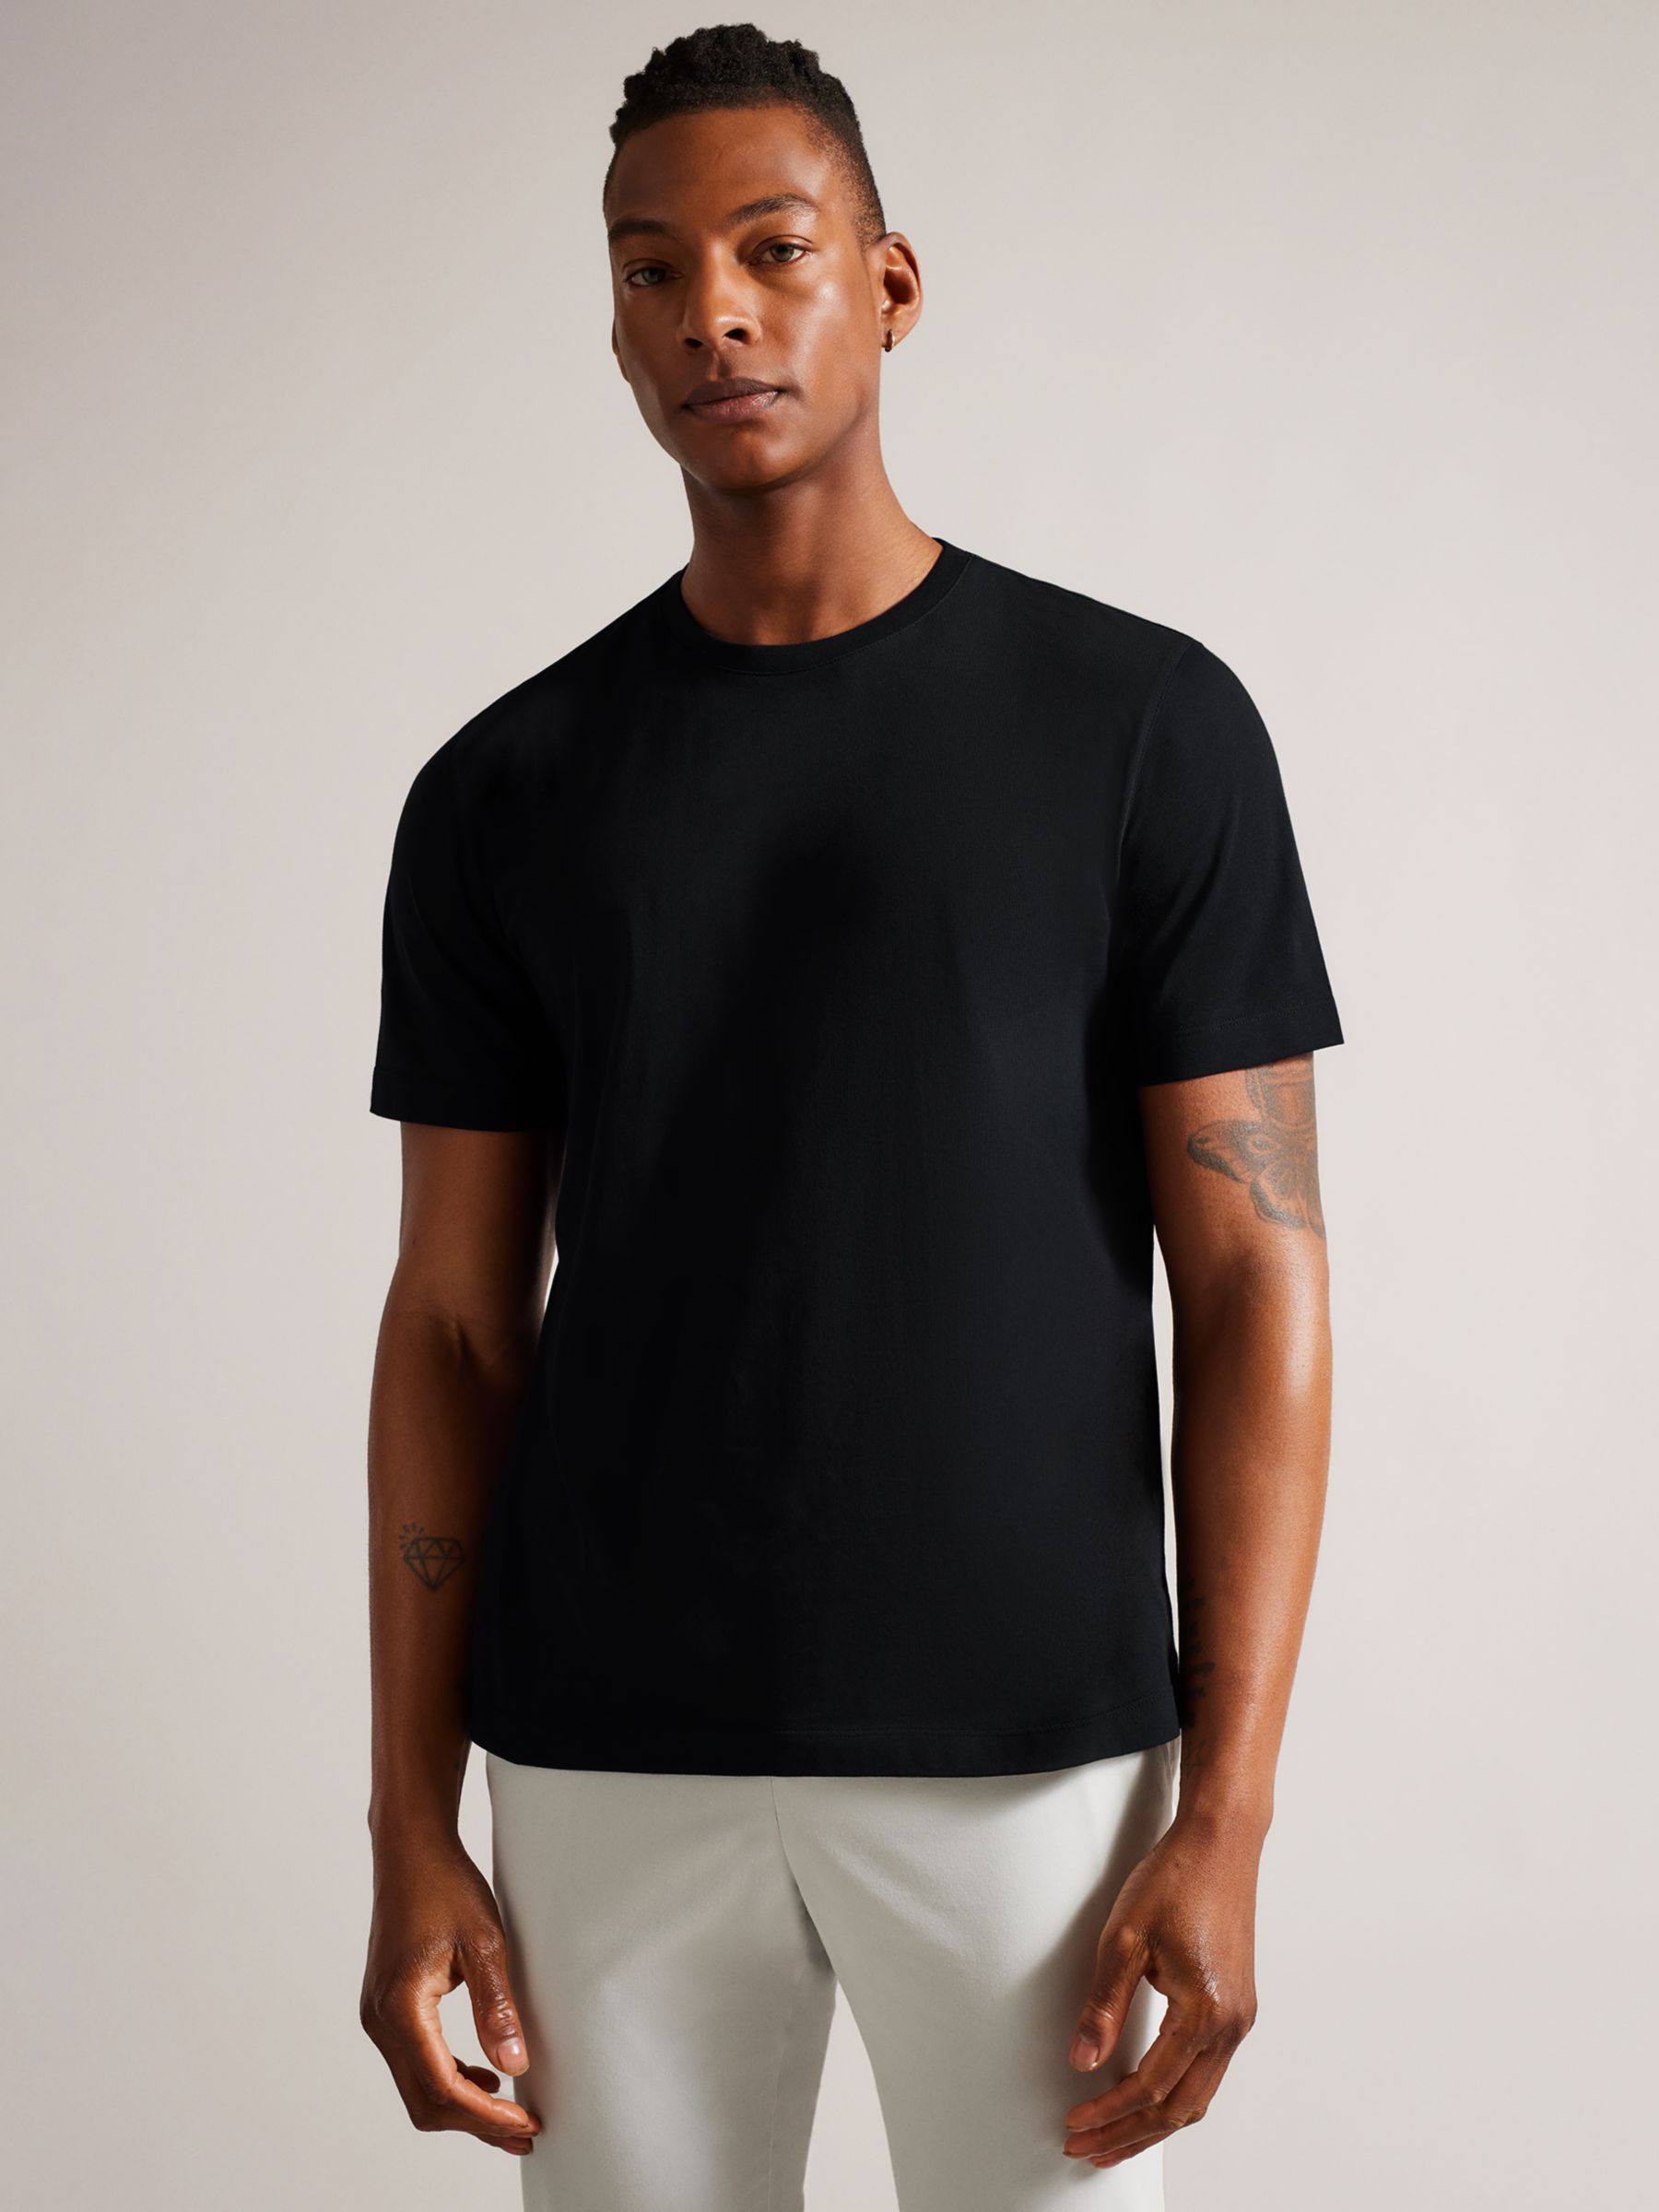 Ted Baker Tywinn Cotton T-Shirt, Black Black at John Lewis & Partners